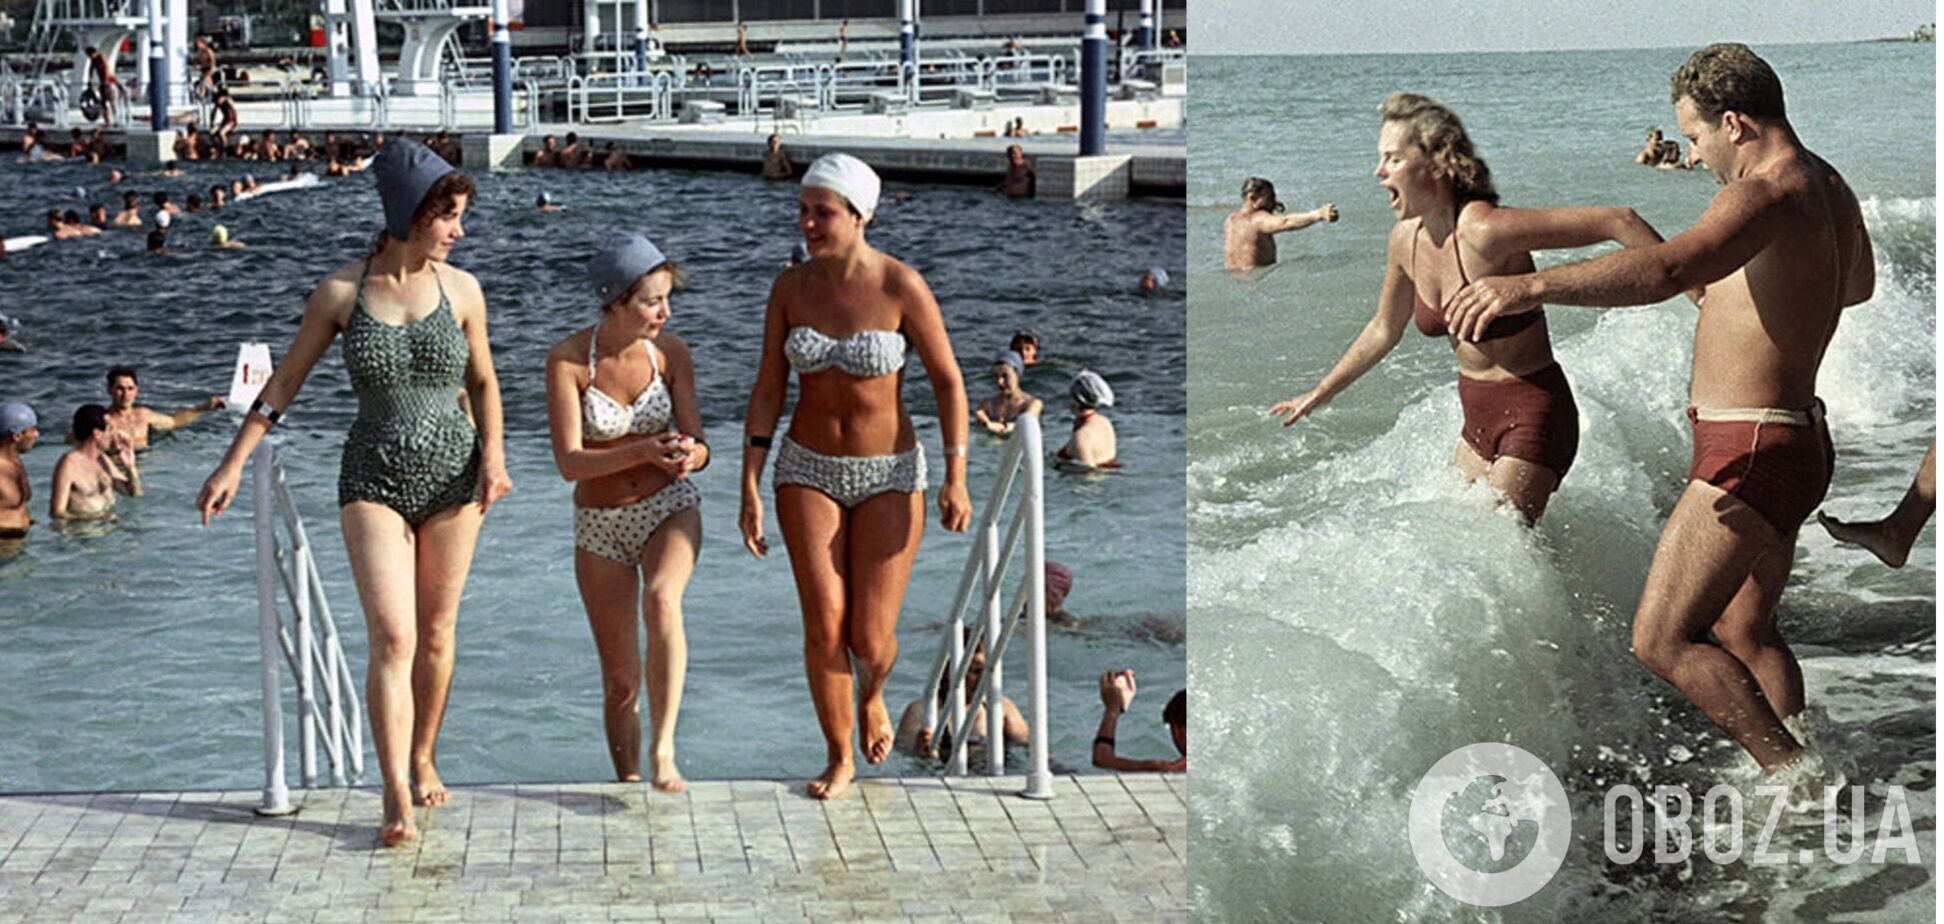 Какой была мода на купальники во времена СССР